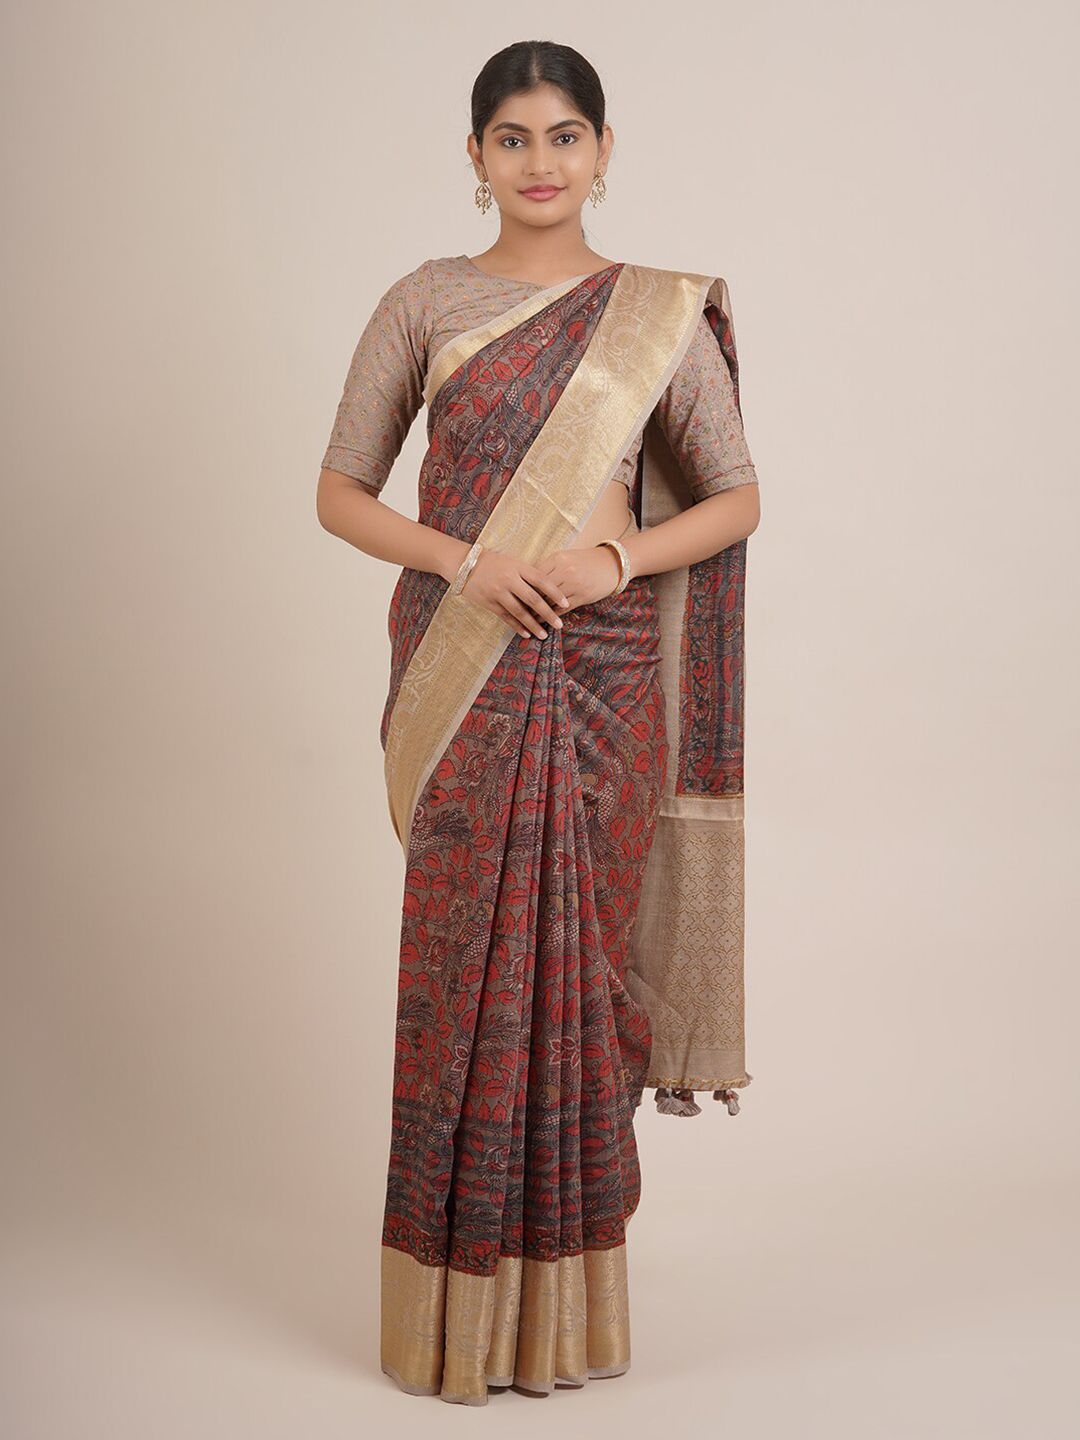 Pothys Grey & Red Kalamkari Zari Pure Silk Saree Price in India